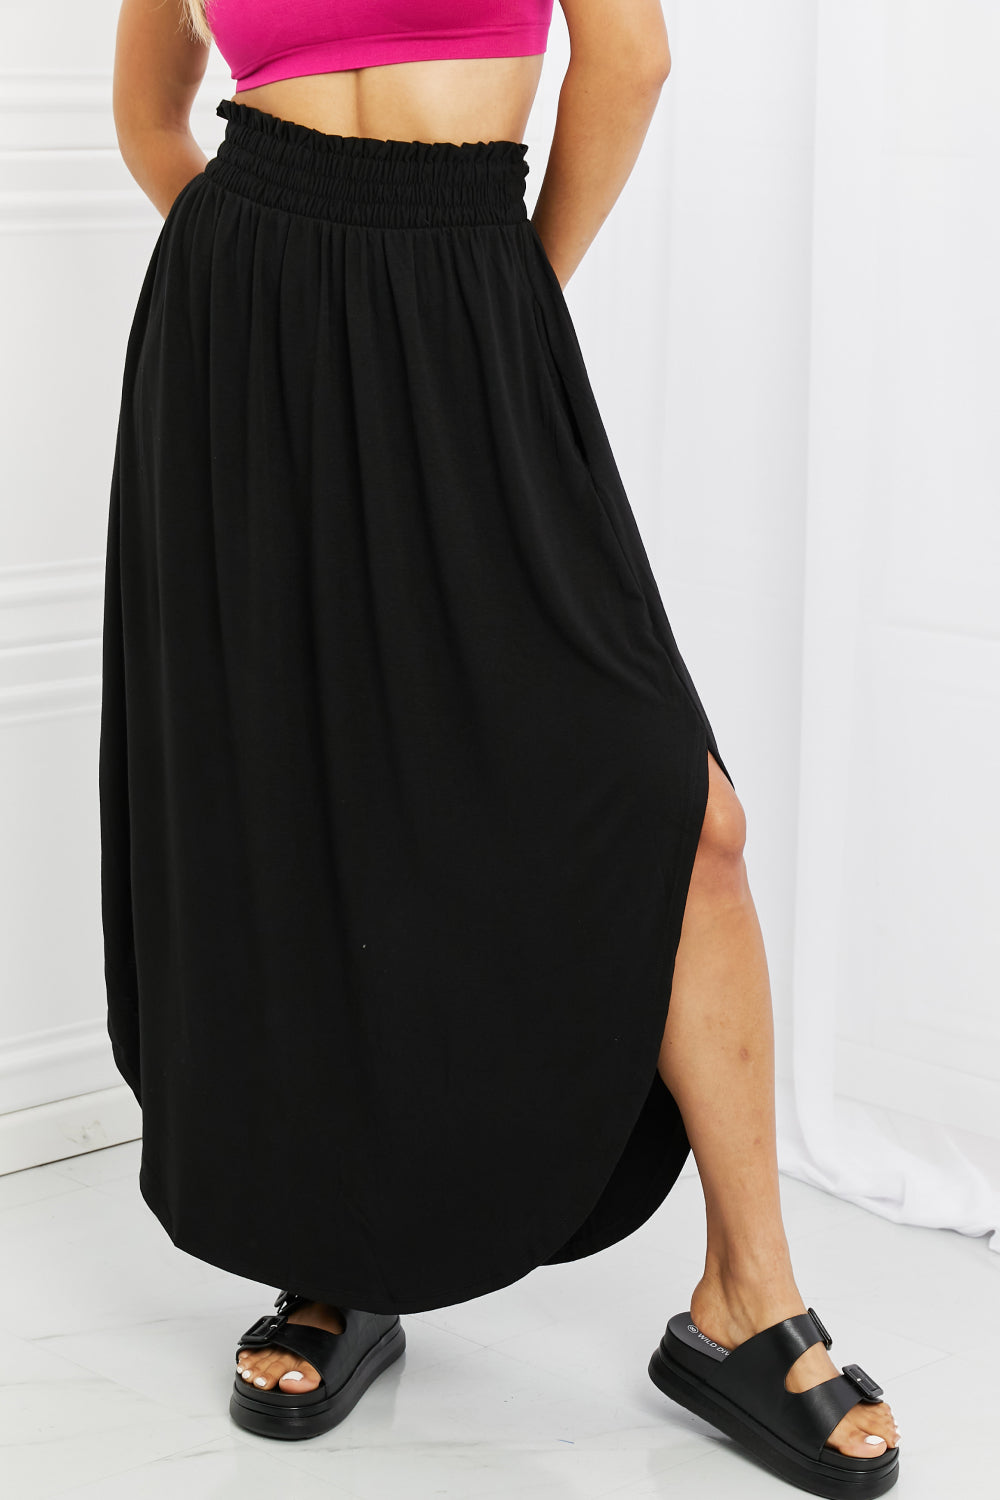 Zenana It's My Time Full Size Side Scoop Scrunch Skirt in Black - The Fashion Unicorn